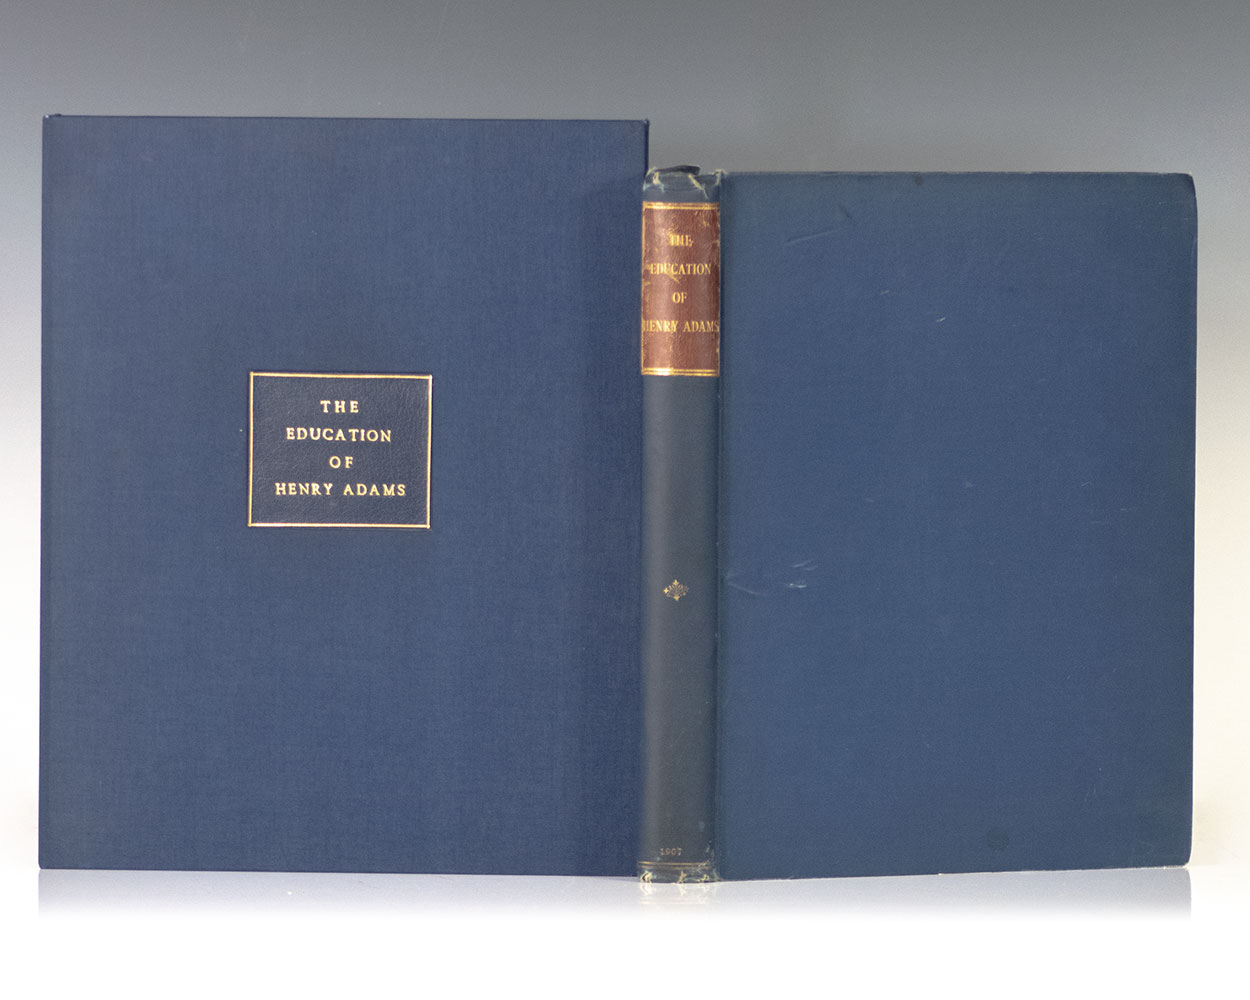 The Education of Henry Adams. - Raptis Rare Books | Fine Rare and ...